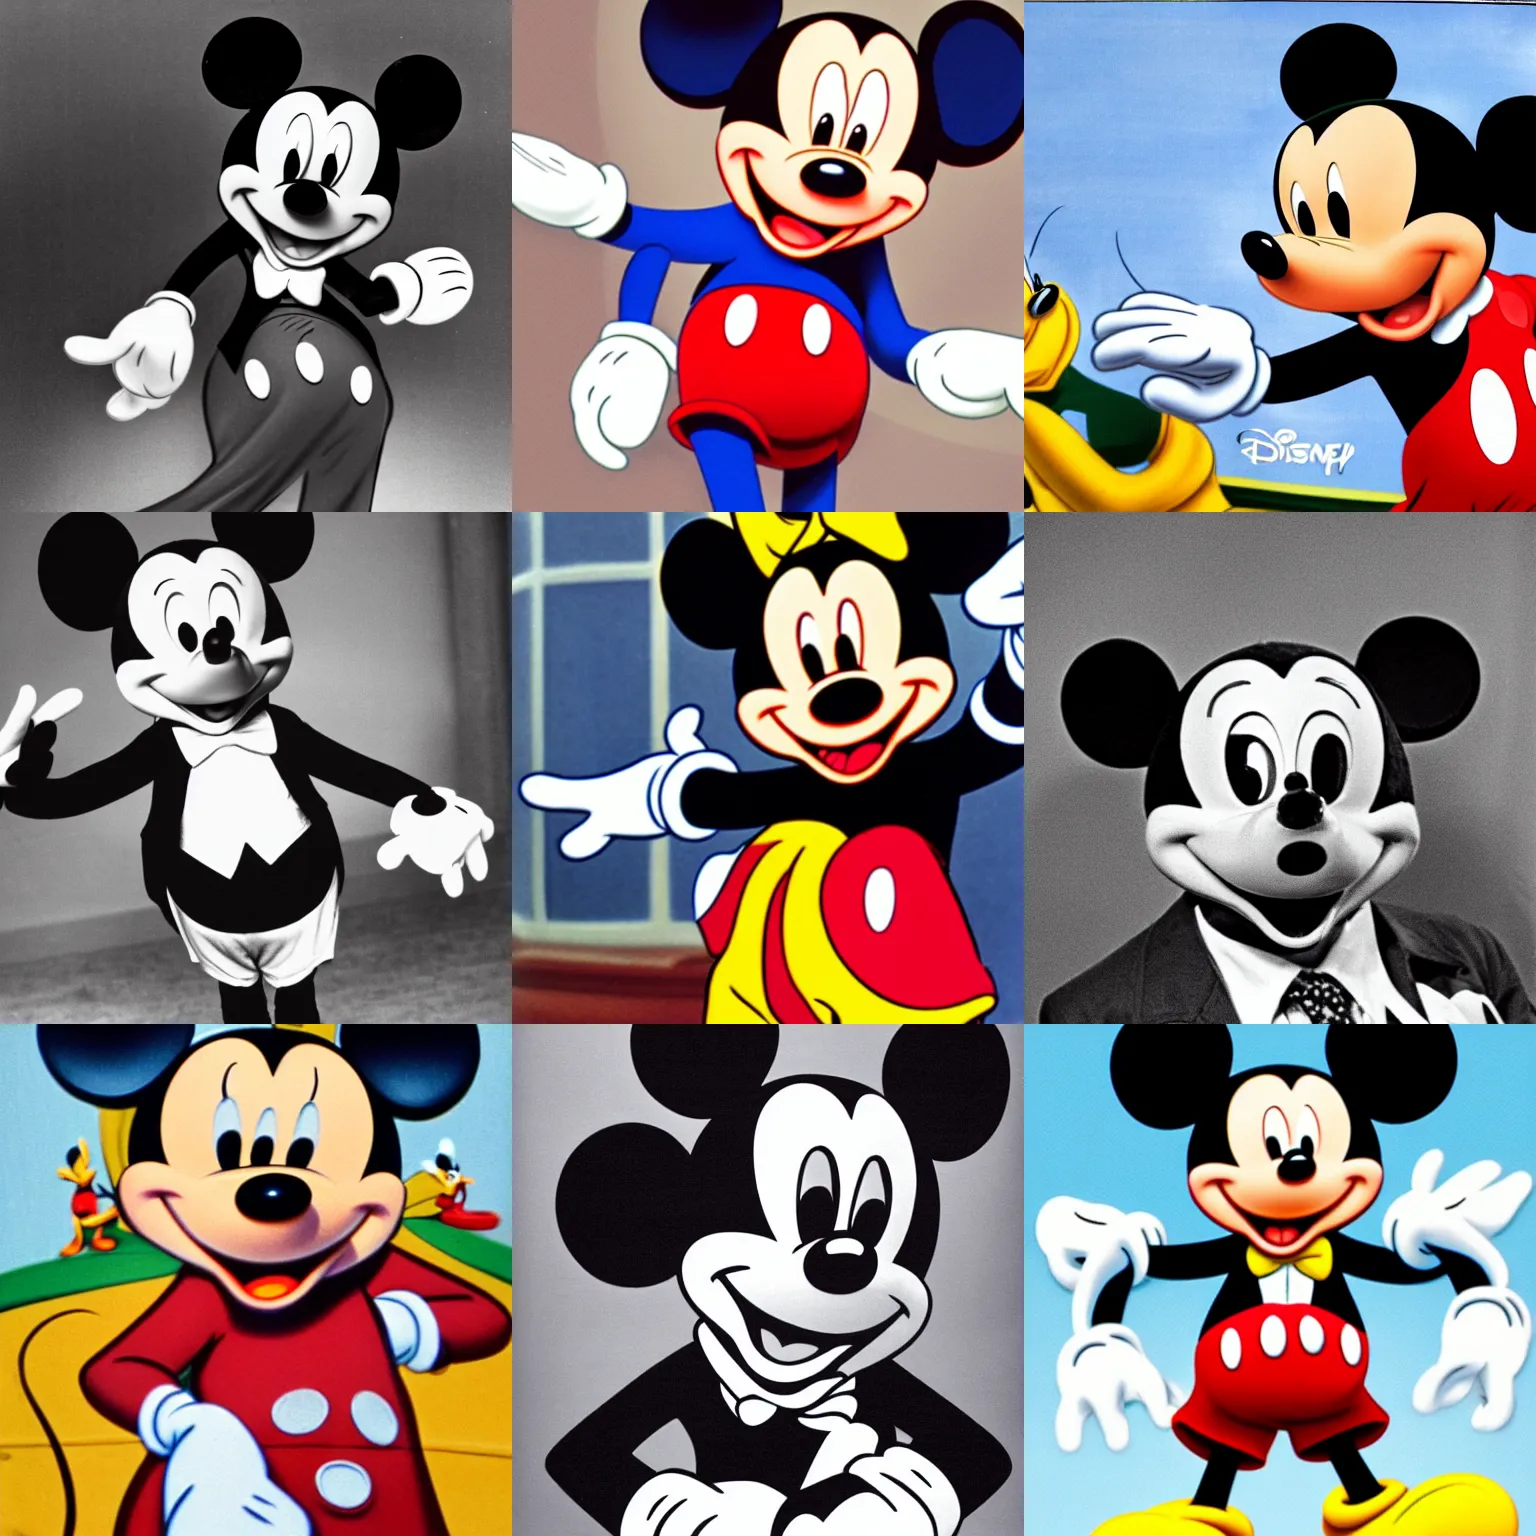 Prompt: Walt Disney's Mickey Mouse